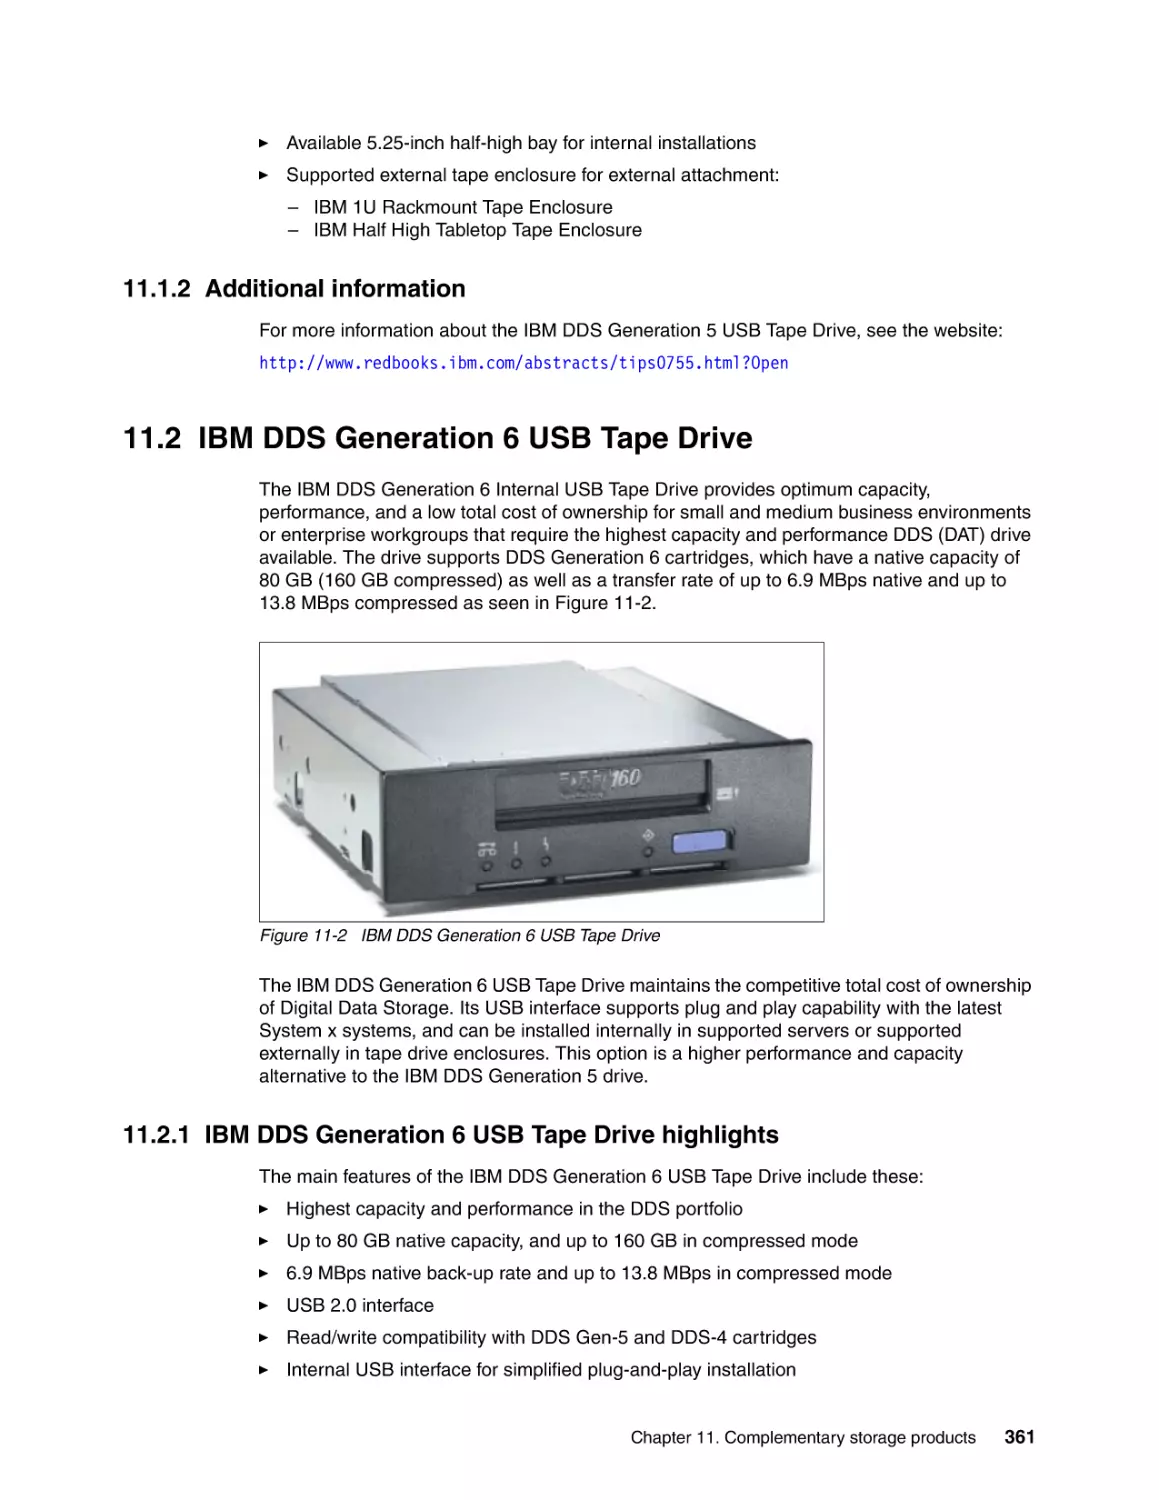 11.1.2 Additional information
11.2 IBM DDS Generation 6 USB Tape Drive
11.2.1 IBM DDS Generation 6 USB Tape Drive highlights